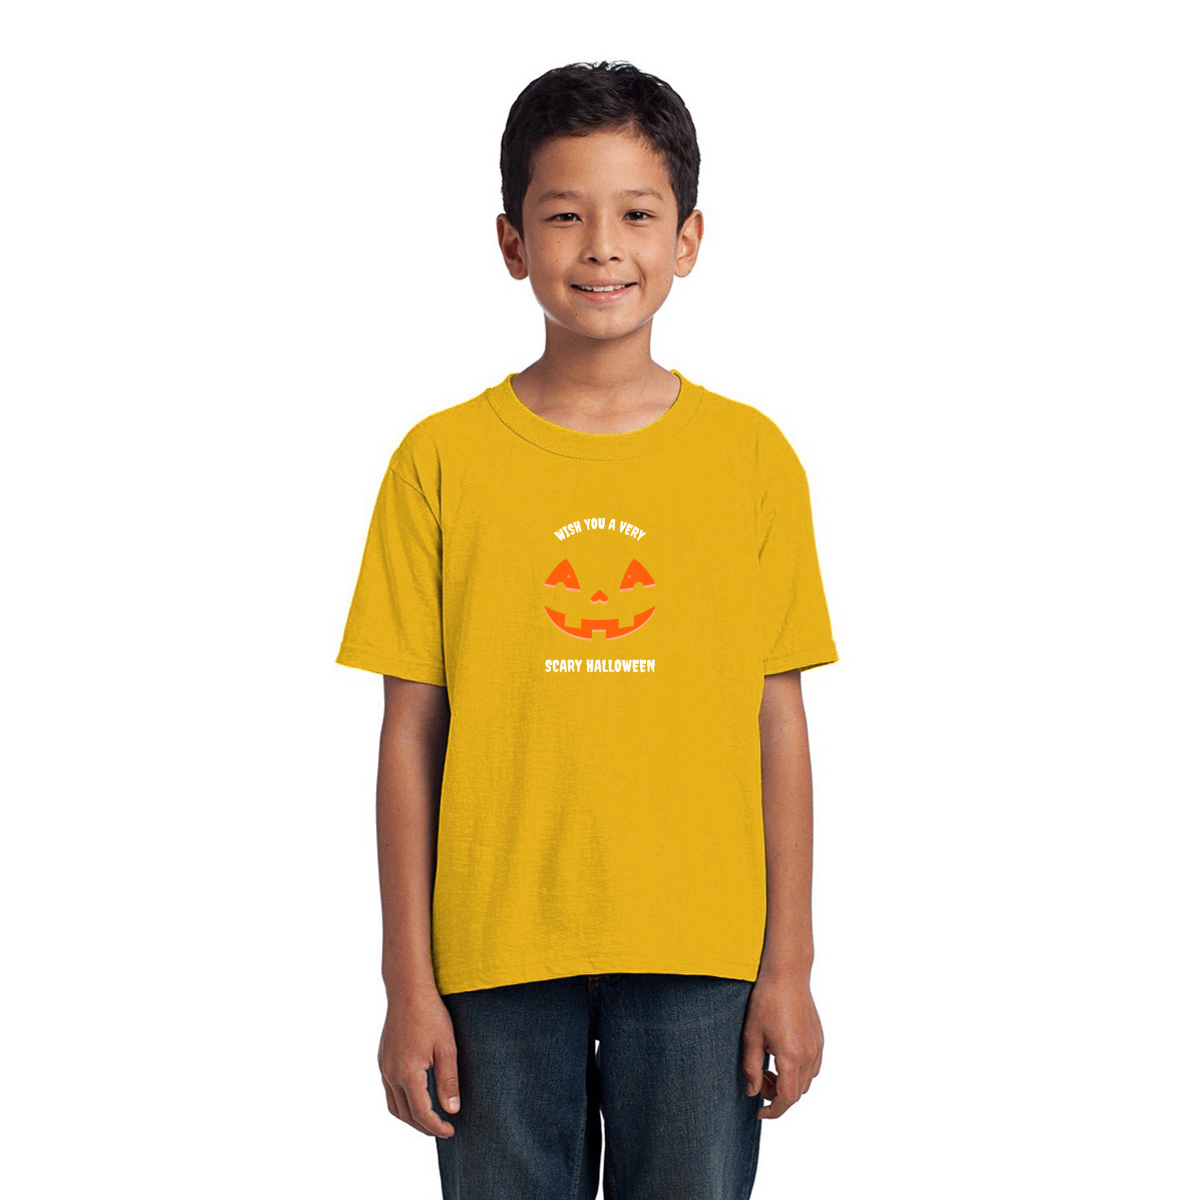 Wish You a Very Scary Halloween Kids T-shirt | Yellow